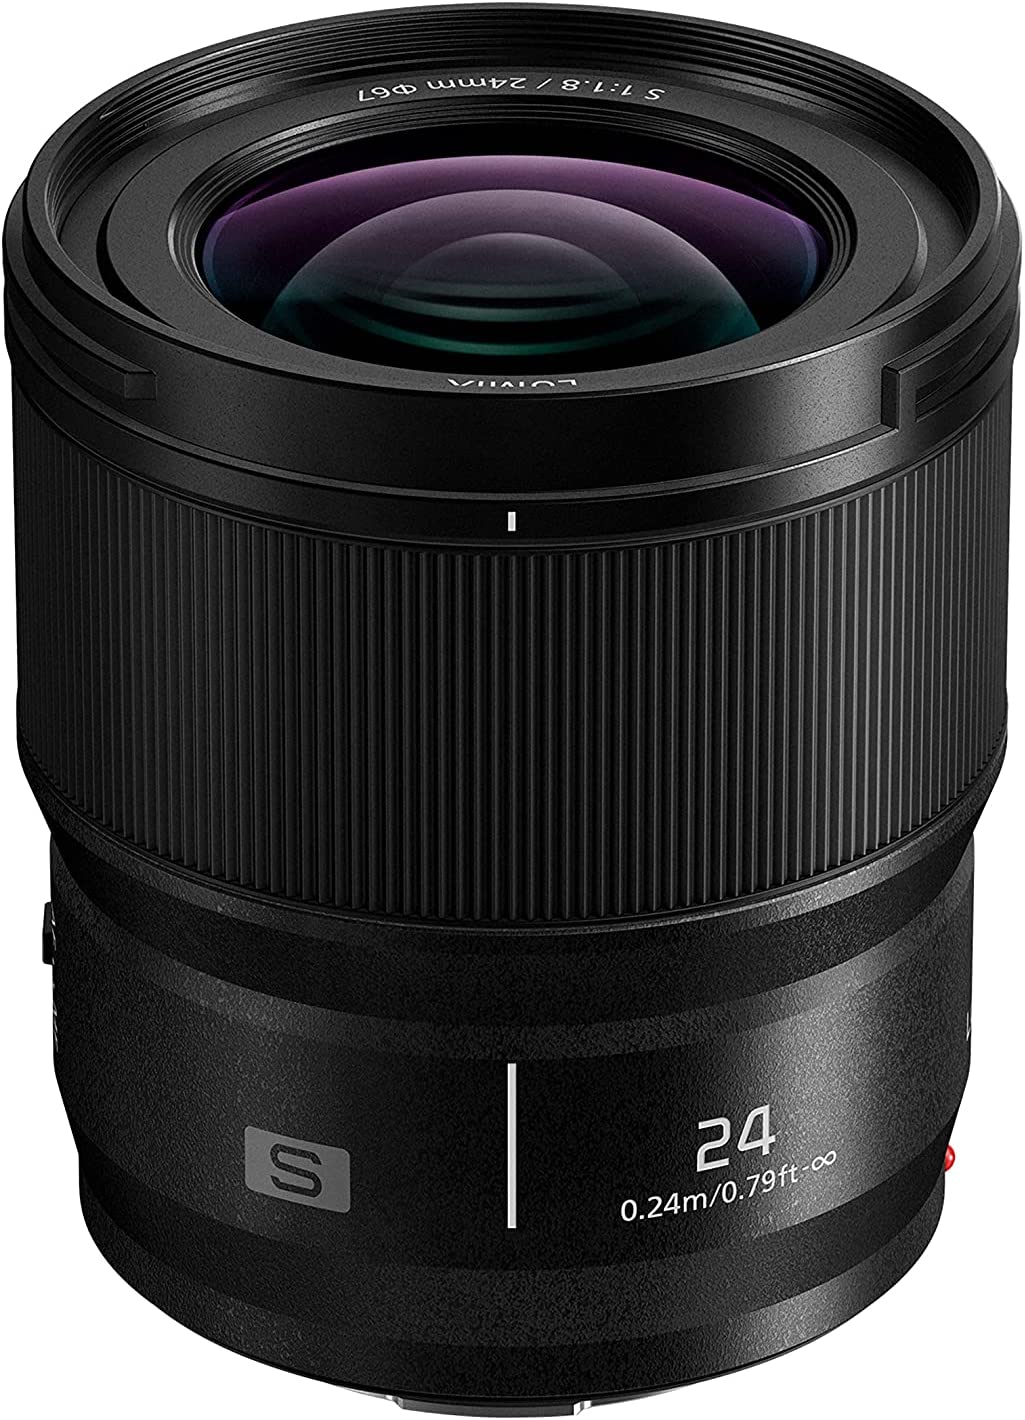 Product Image of Panasonic Lumix S Series 24mm F1.8 - L mount Lens